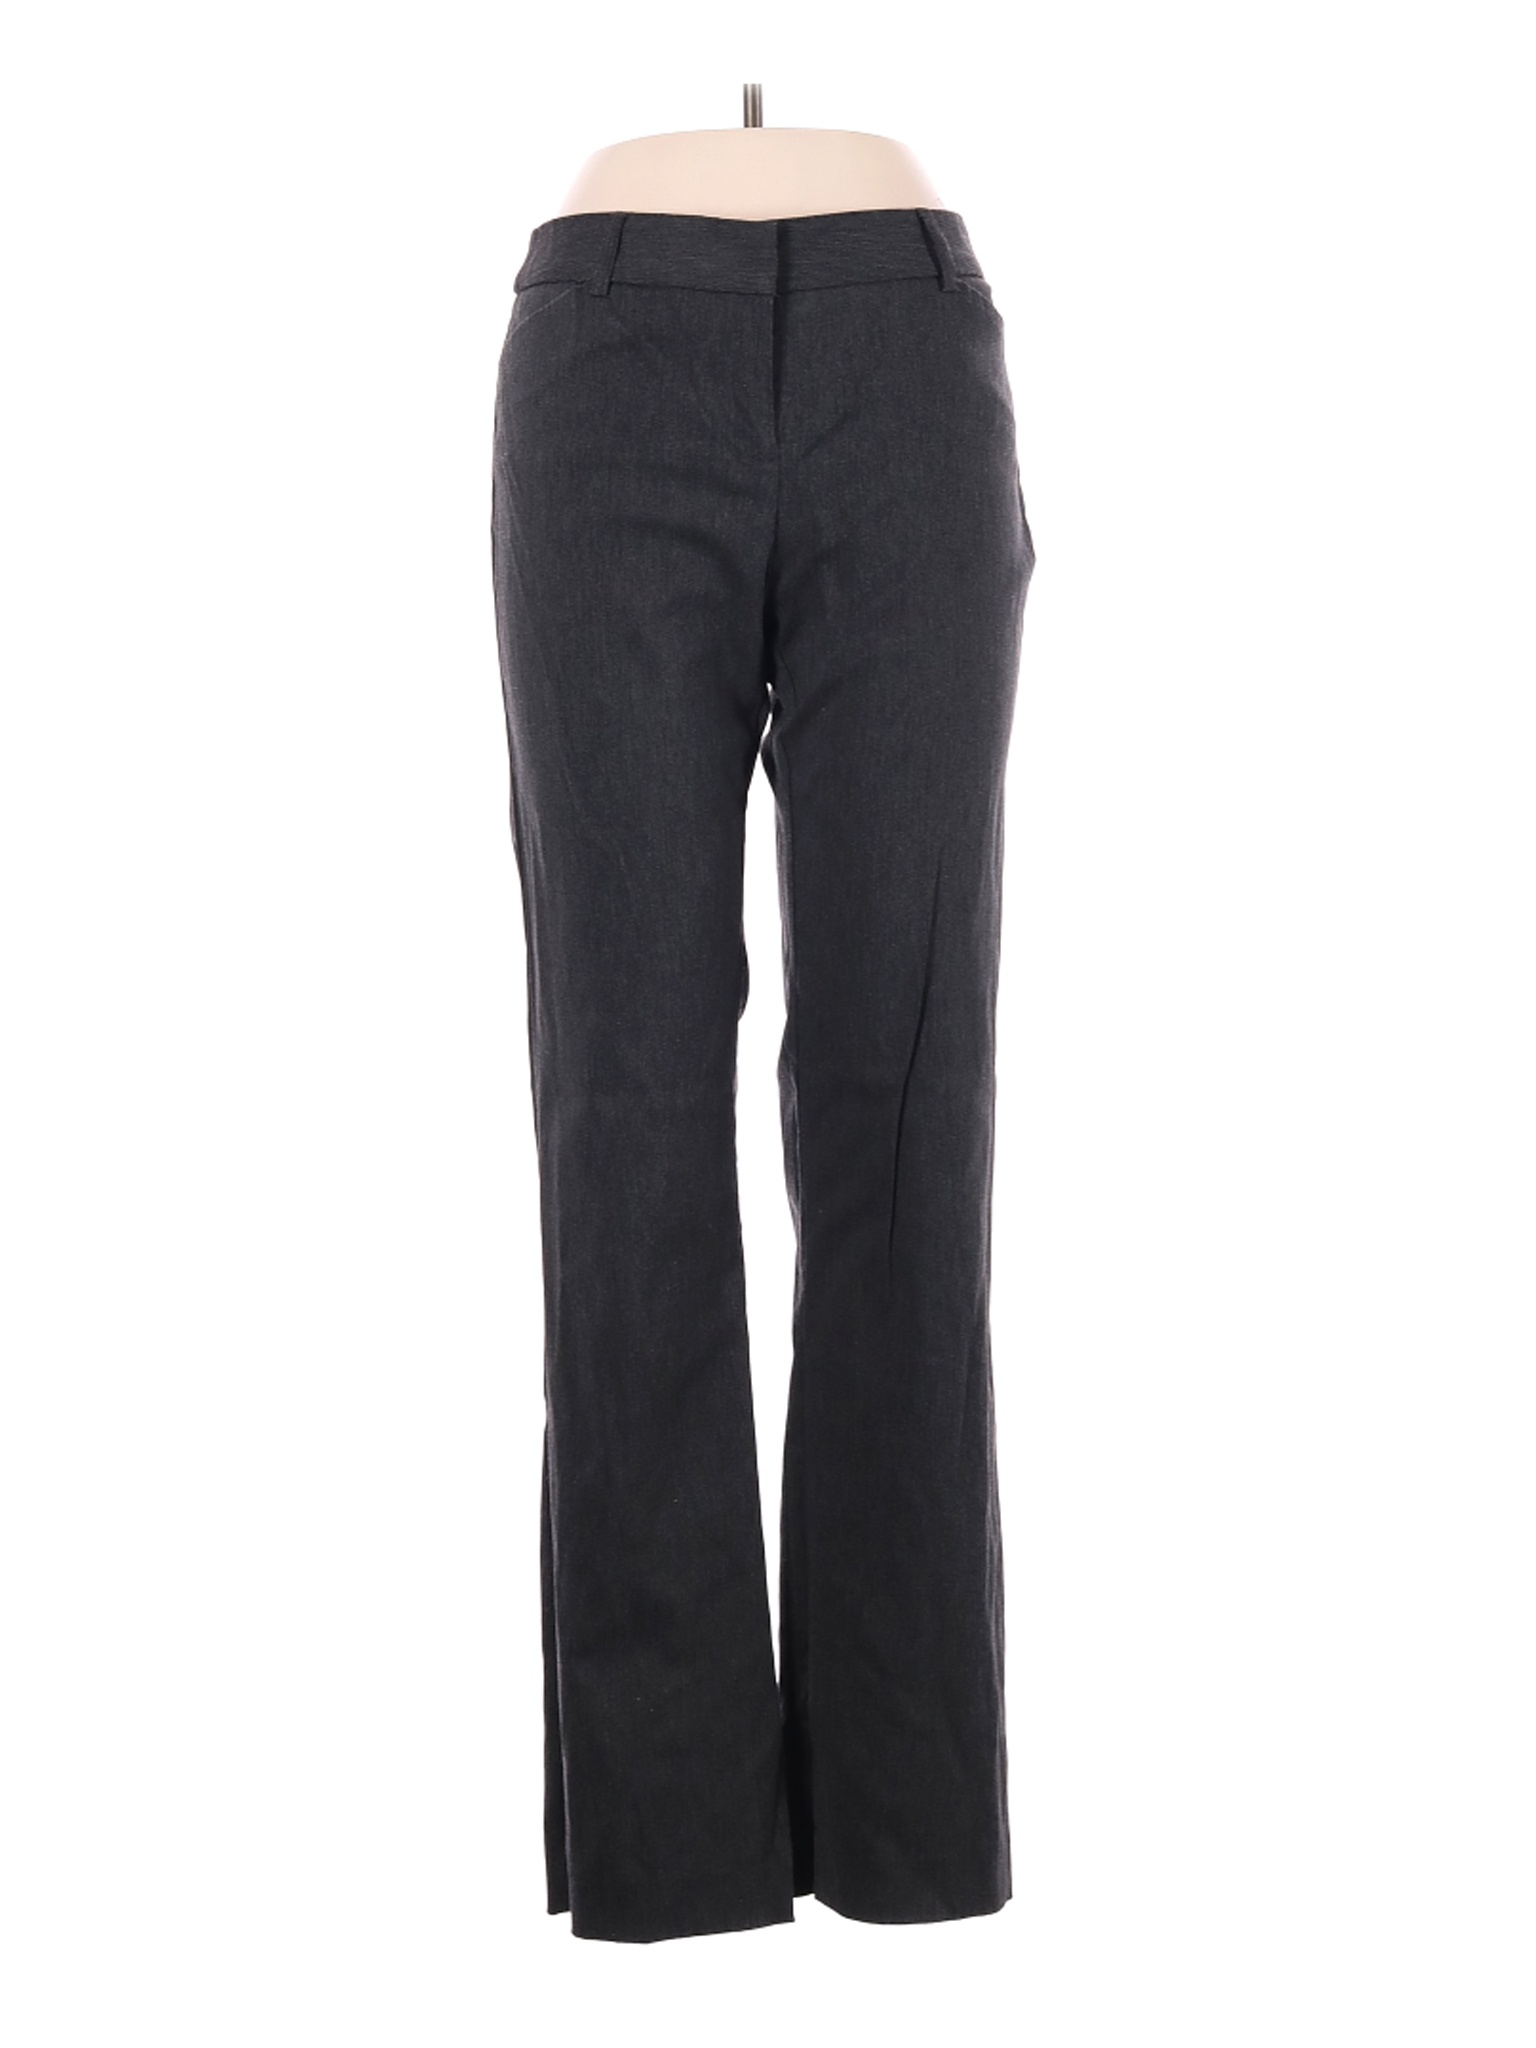 George Women Black Dress Pants 6 | eBay